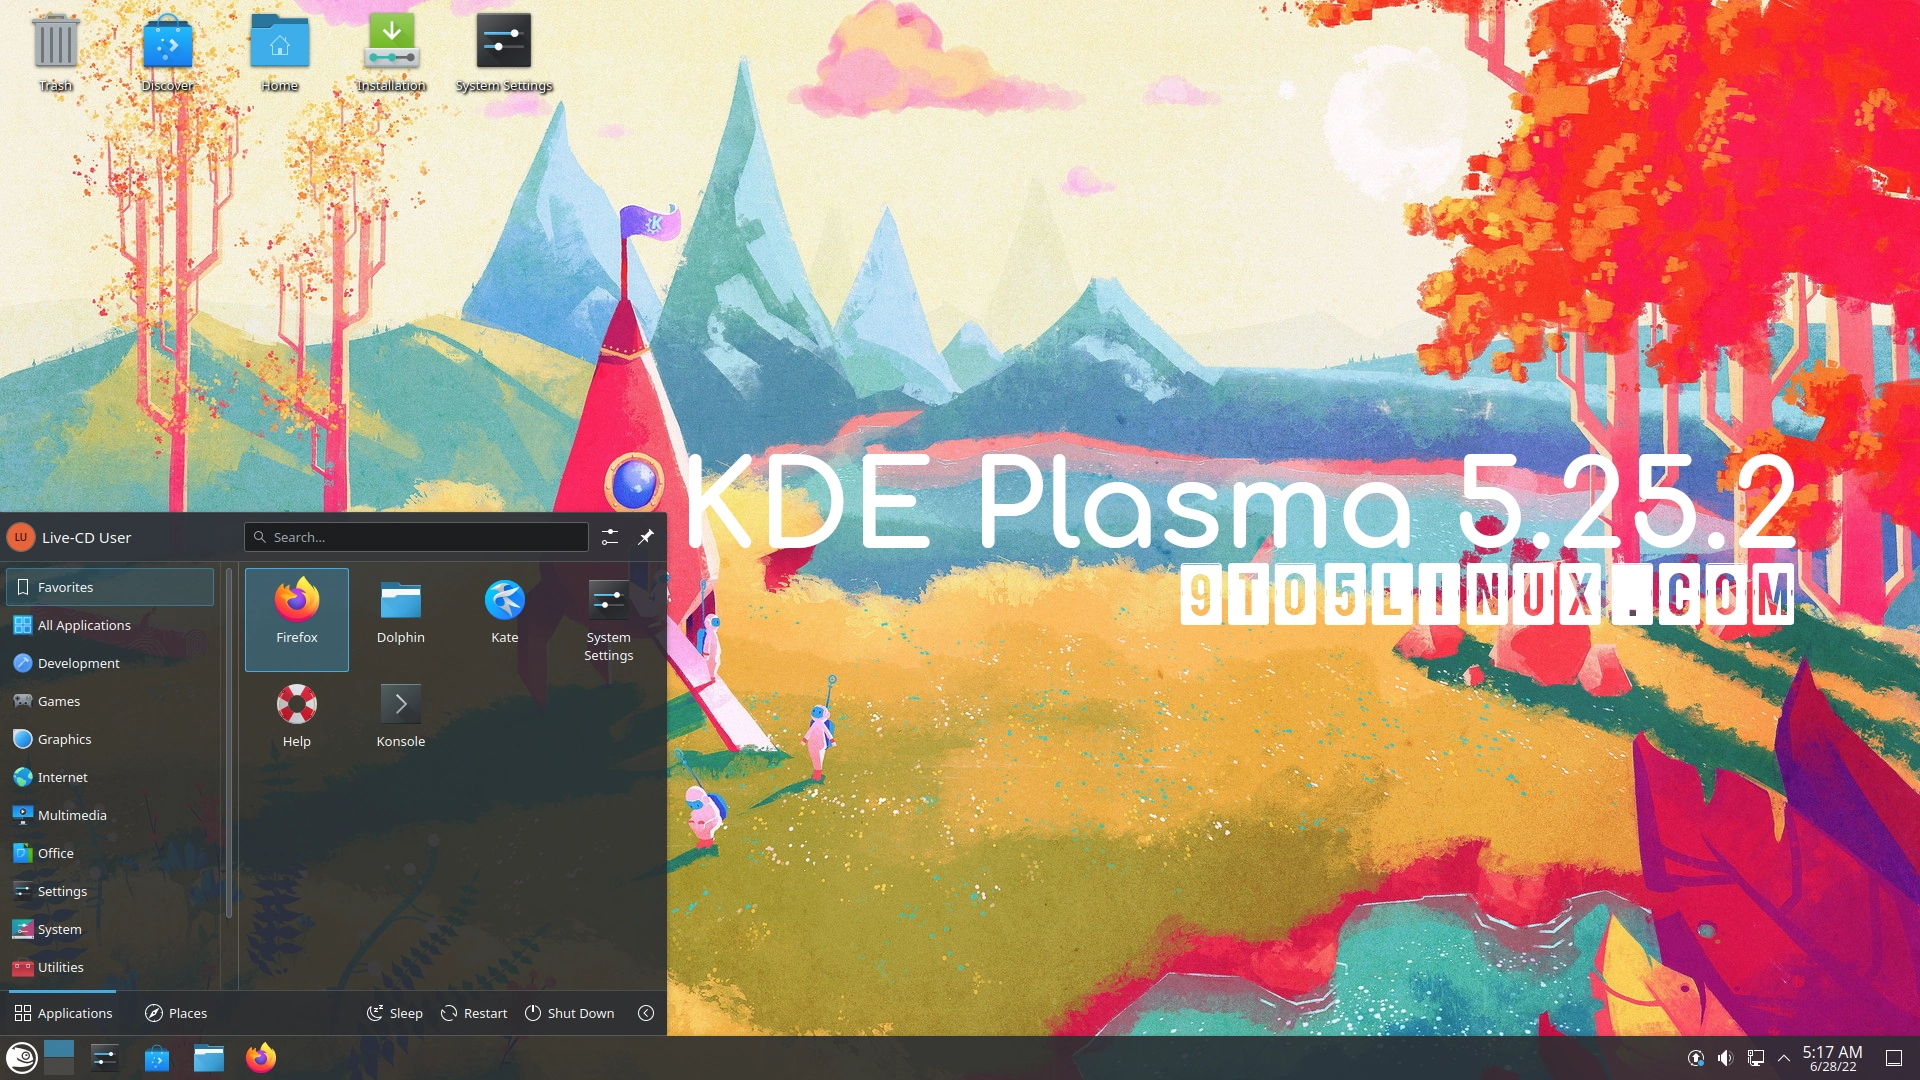 KDE Plasma 5.25.2 Released to Improve Flatpak Support, Present Windows Effect